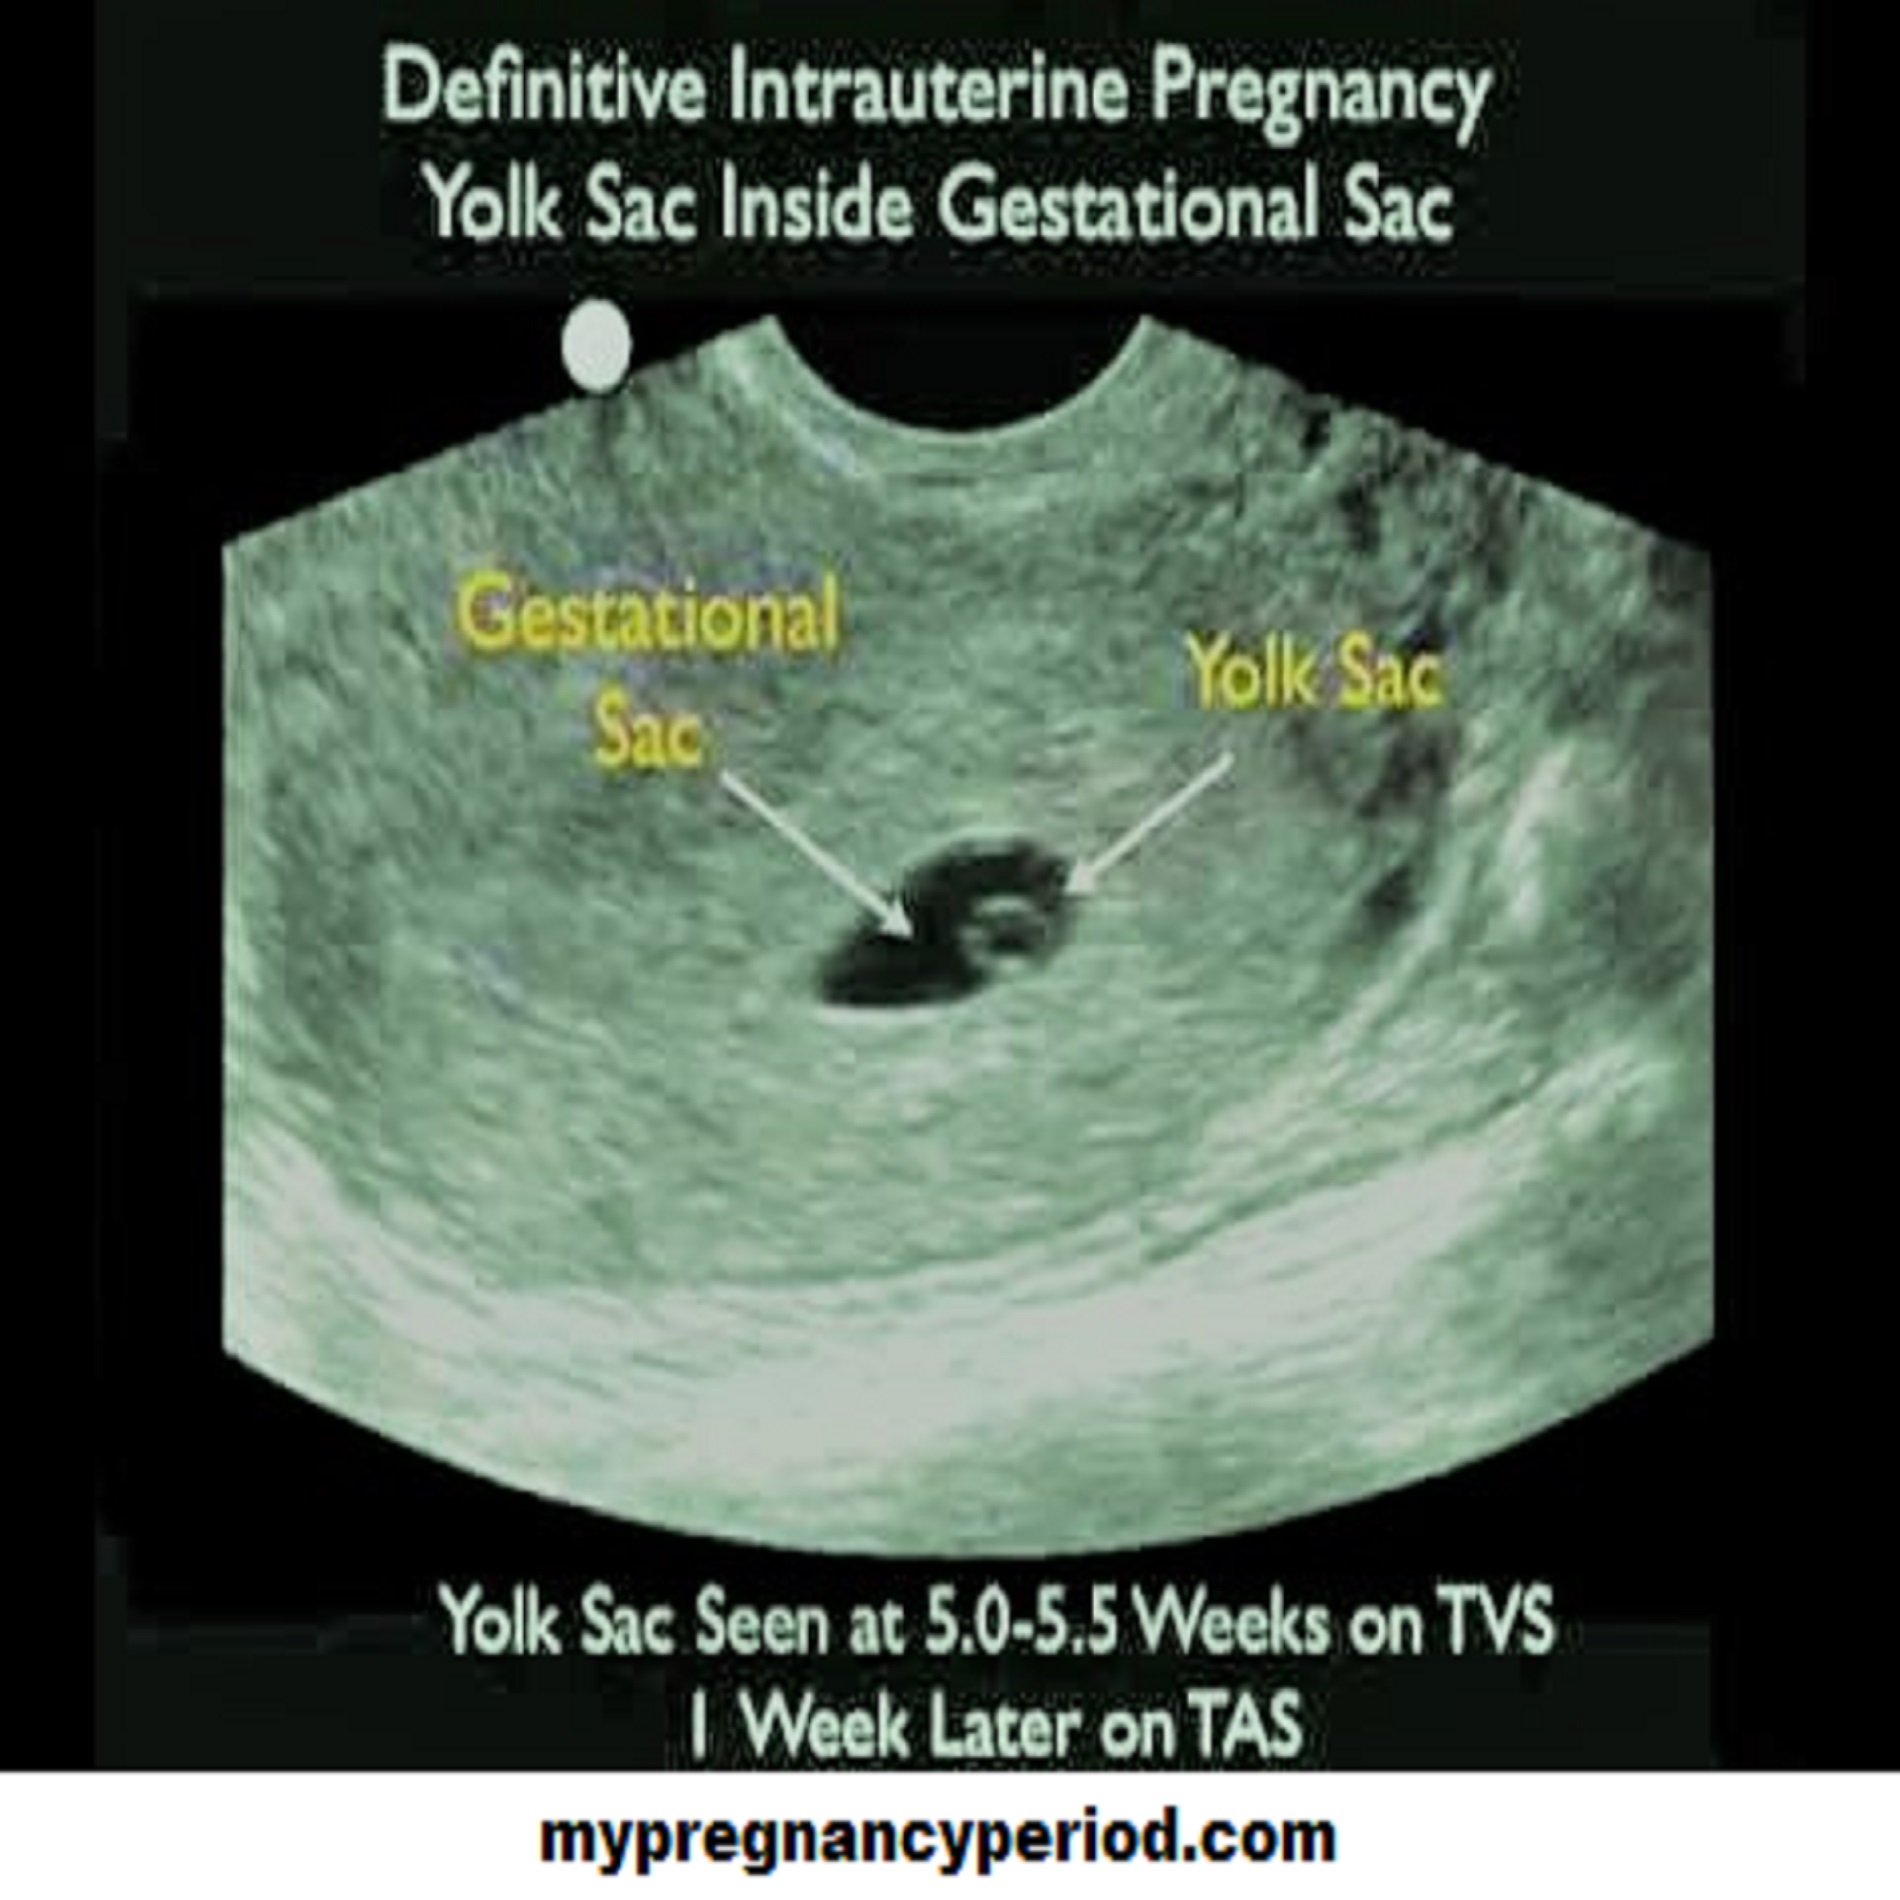 ultrasound view of Intrauterine Pregnancy IUP